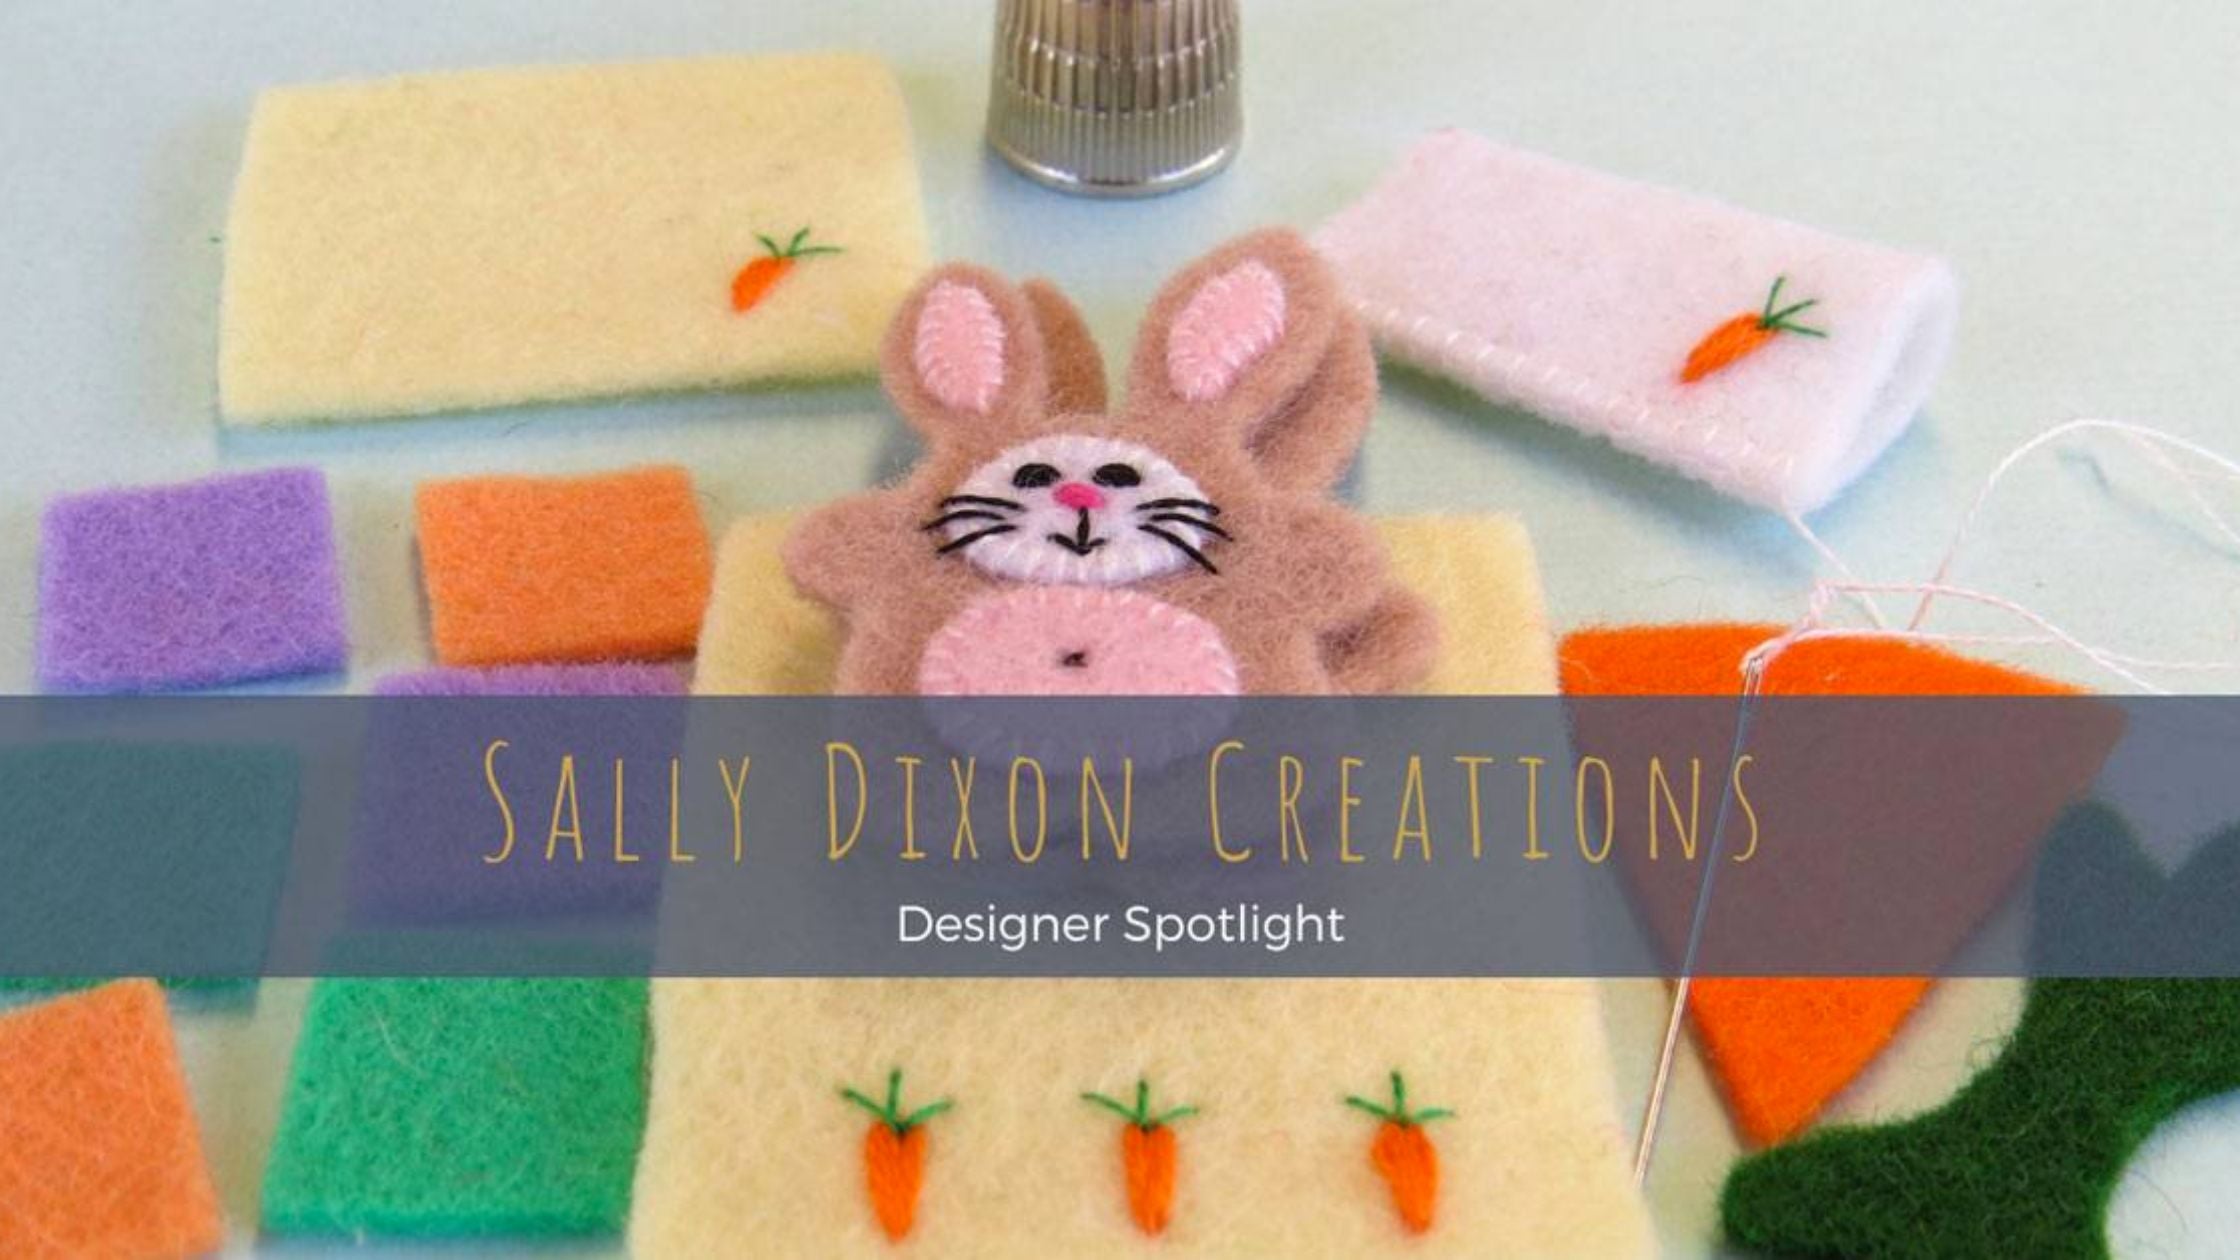 Sally Dixon Creations